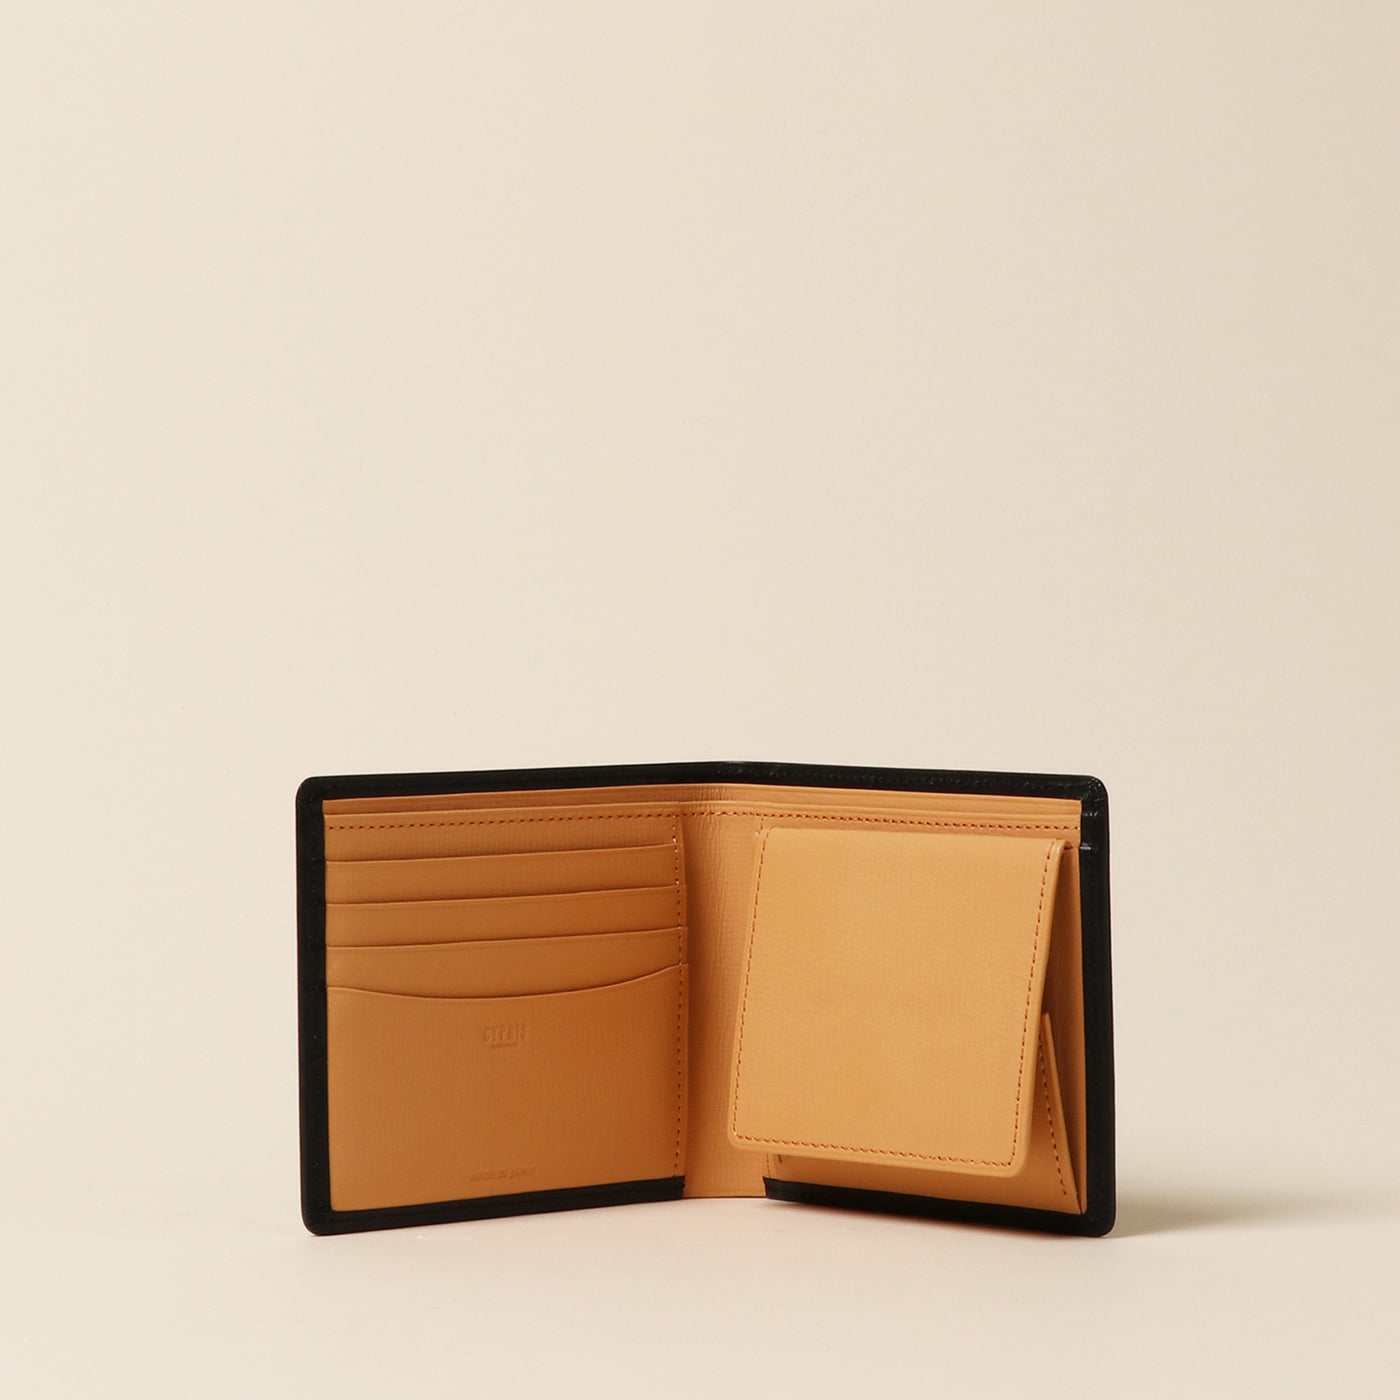 <CYPRIS> White Shirasagi leather billfold with box coin purse, dark brown